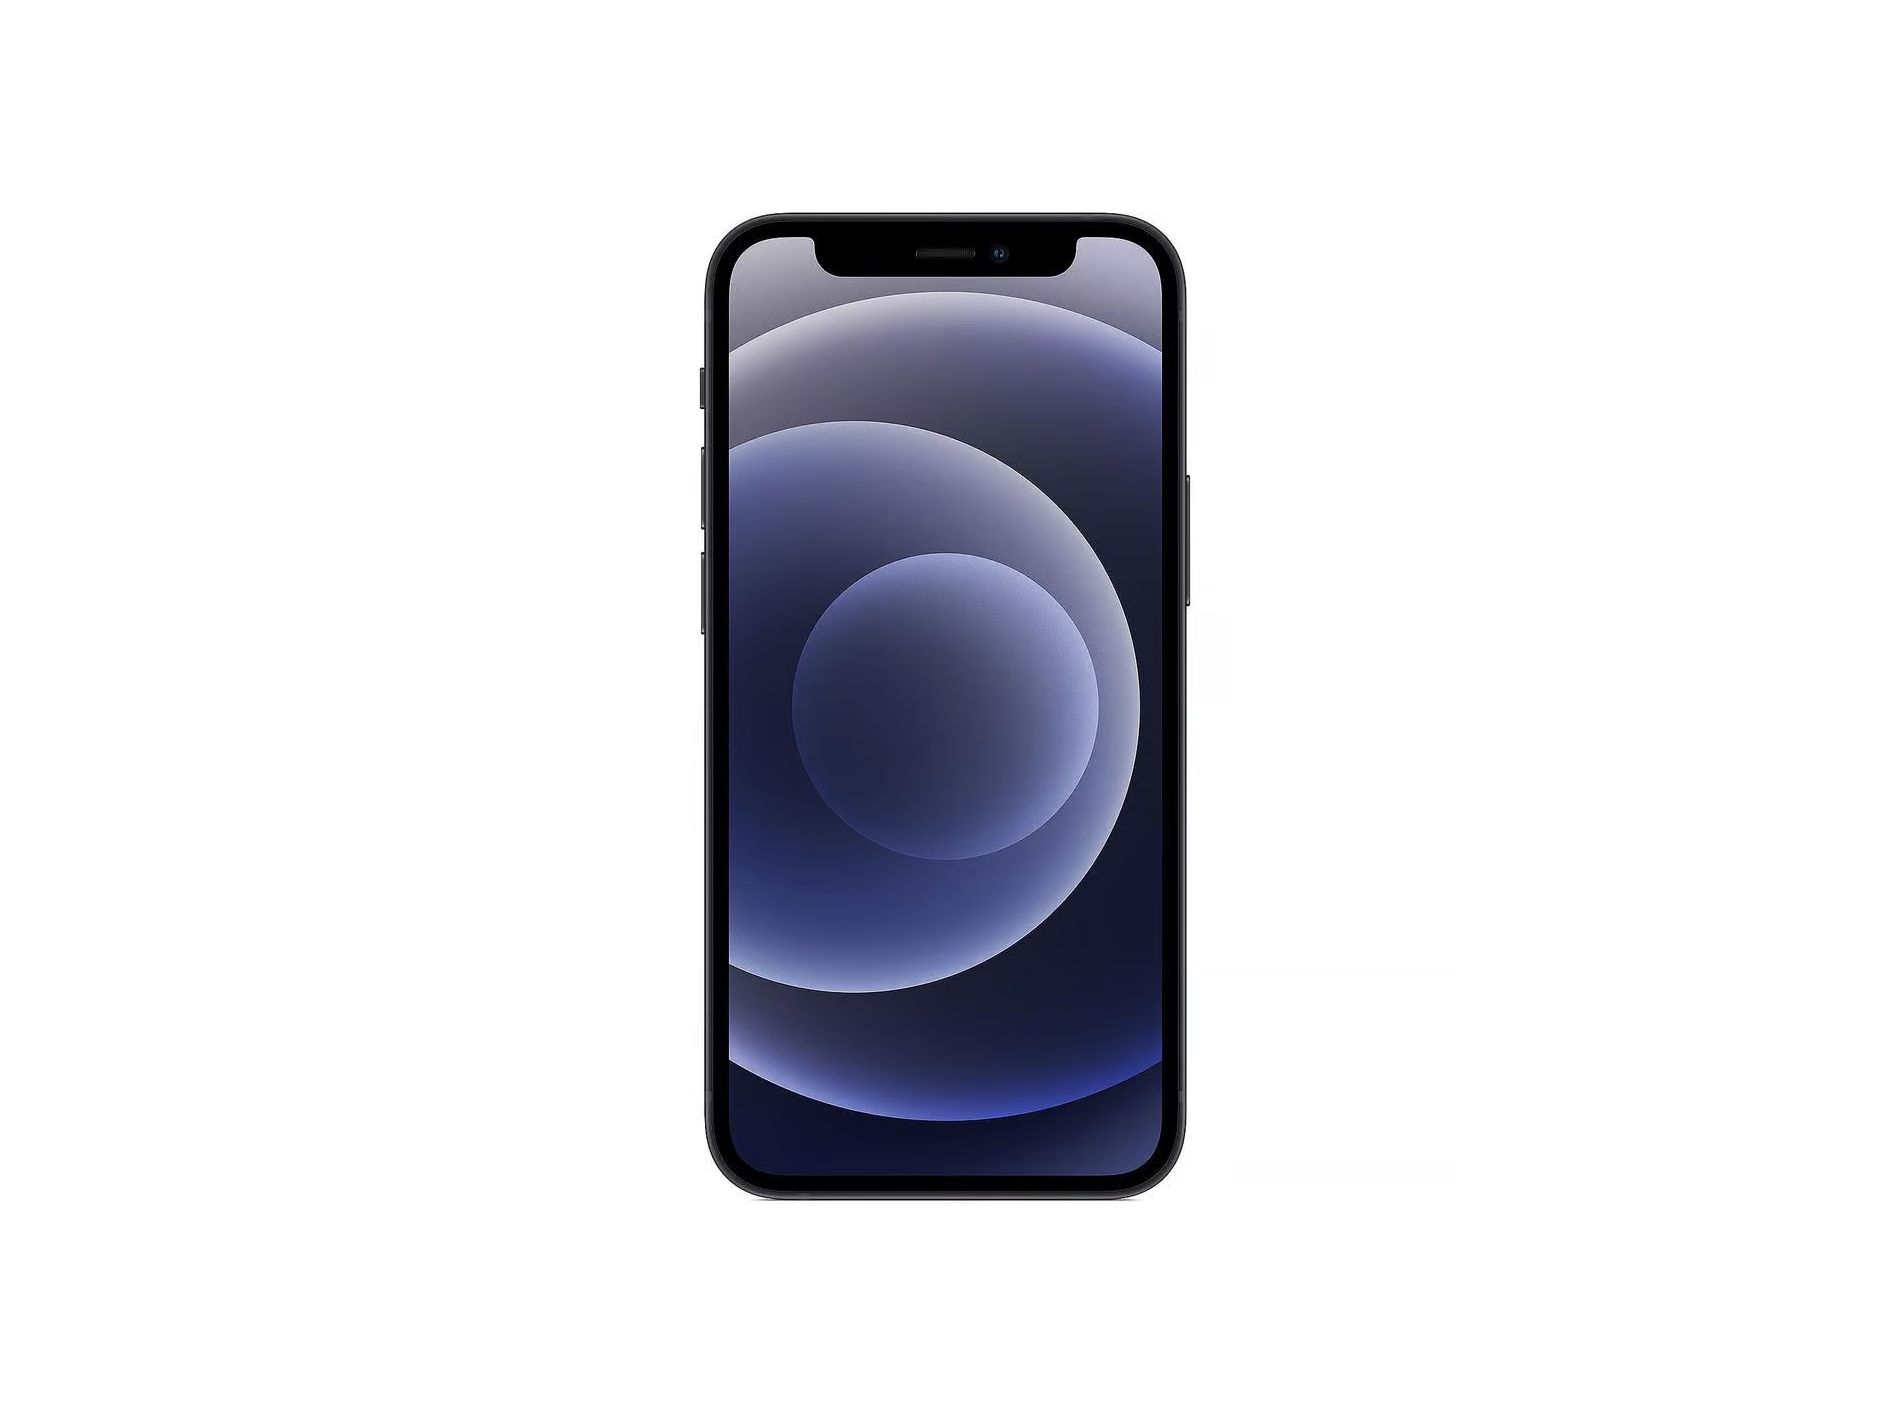 Apple iPhone 12 Mini 64GB Black